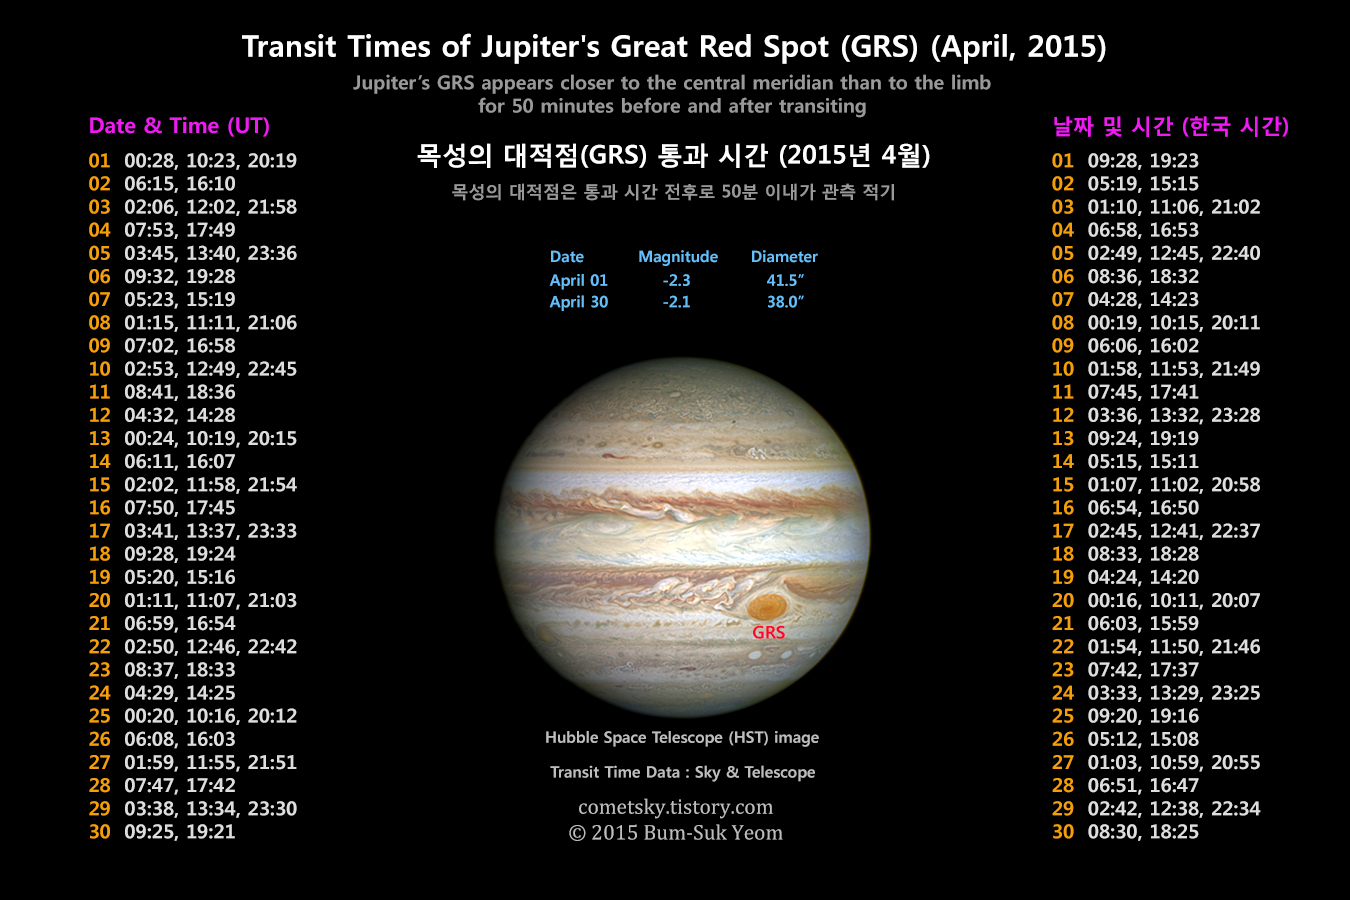 transit_times_of_jupiter_grs_april_2015_web_bsyeom.jpg